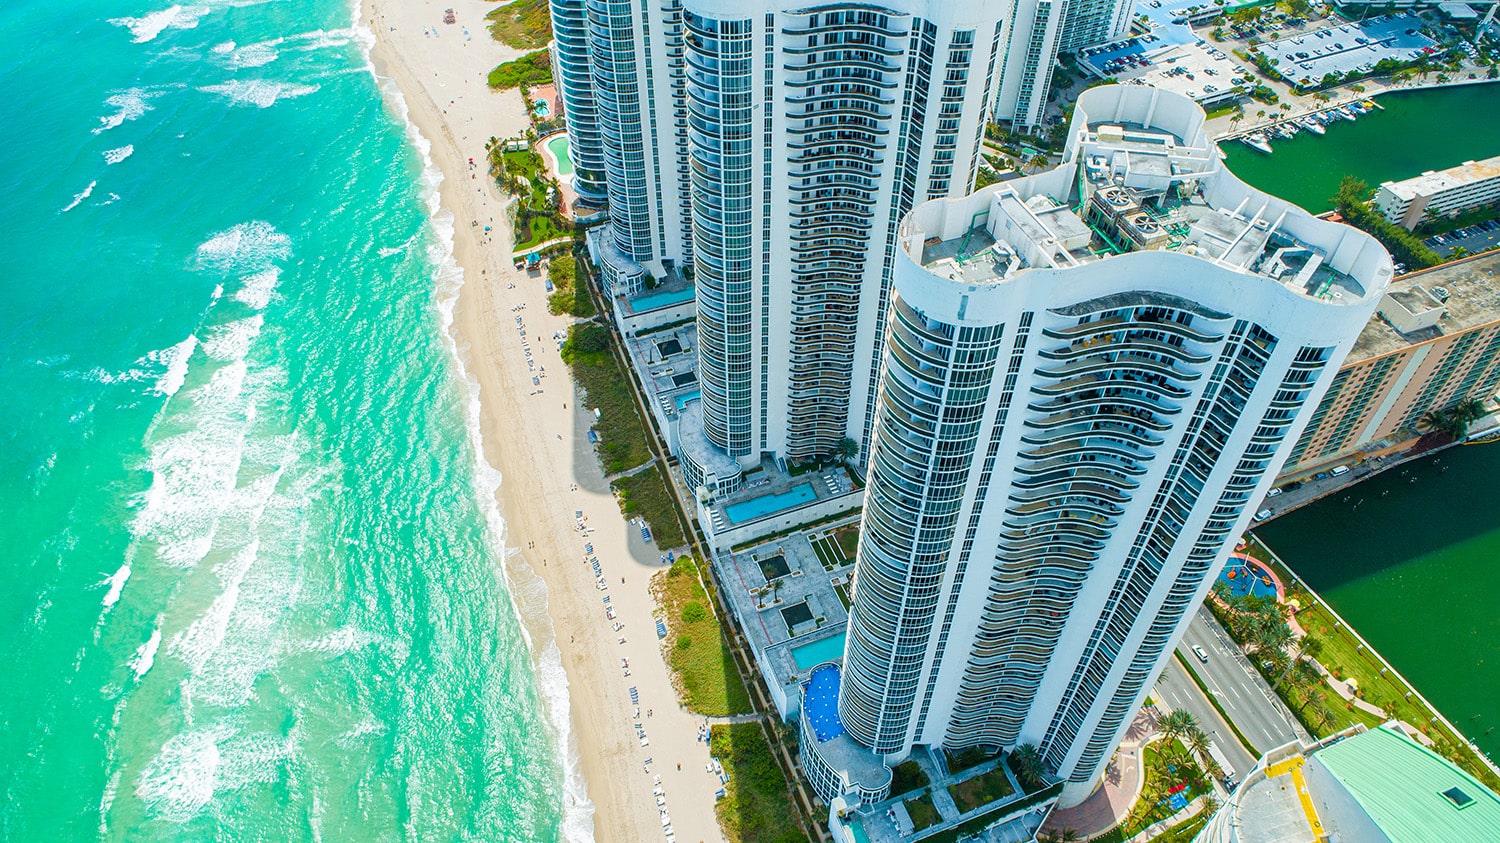 Sunny Isles Beach, Florida – Photo by Mia2you/Shutterstock